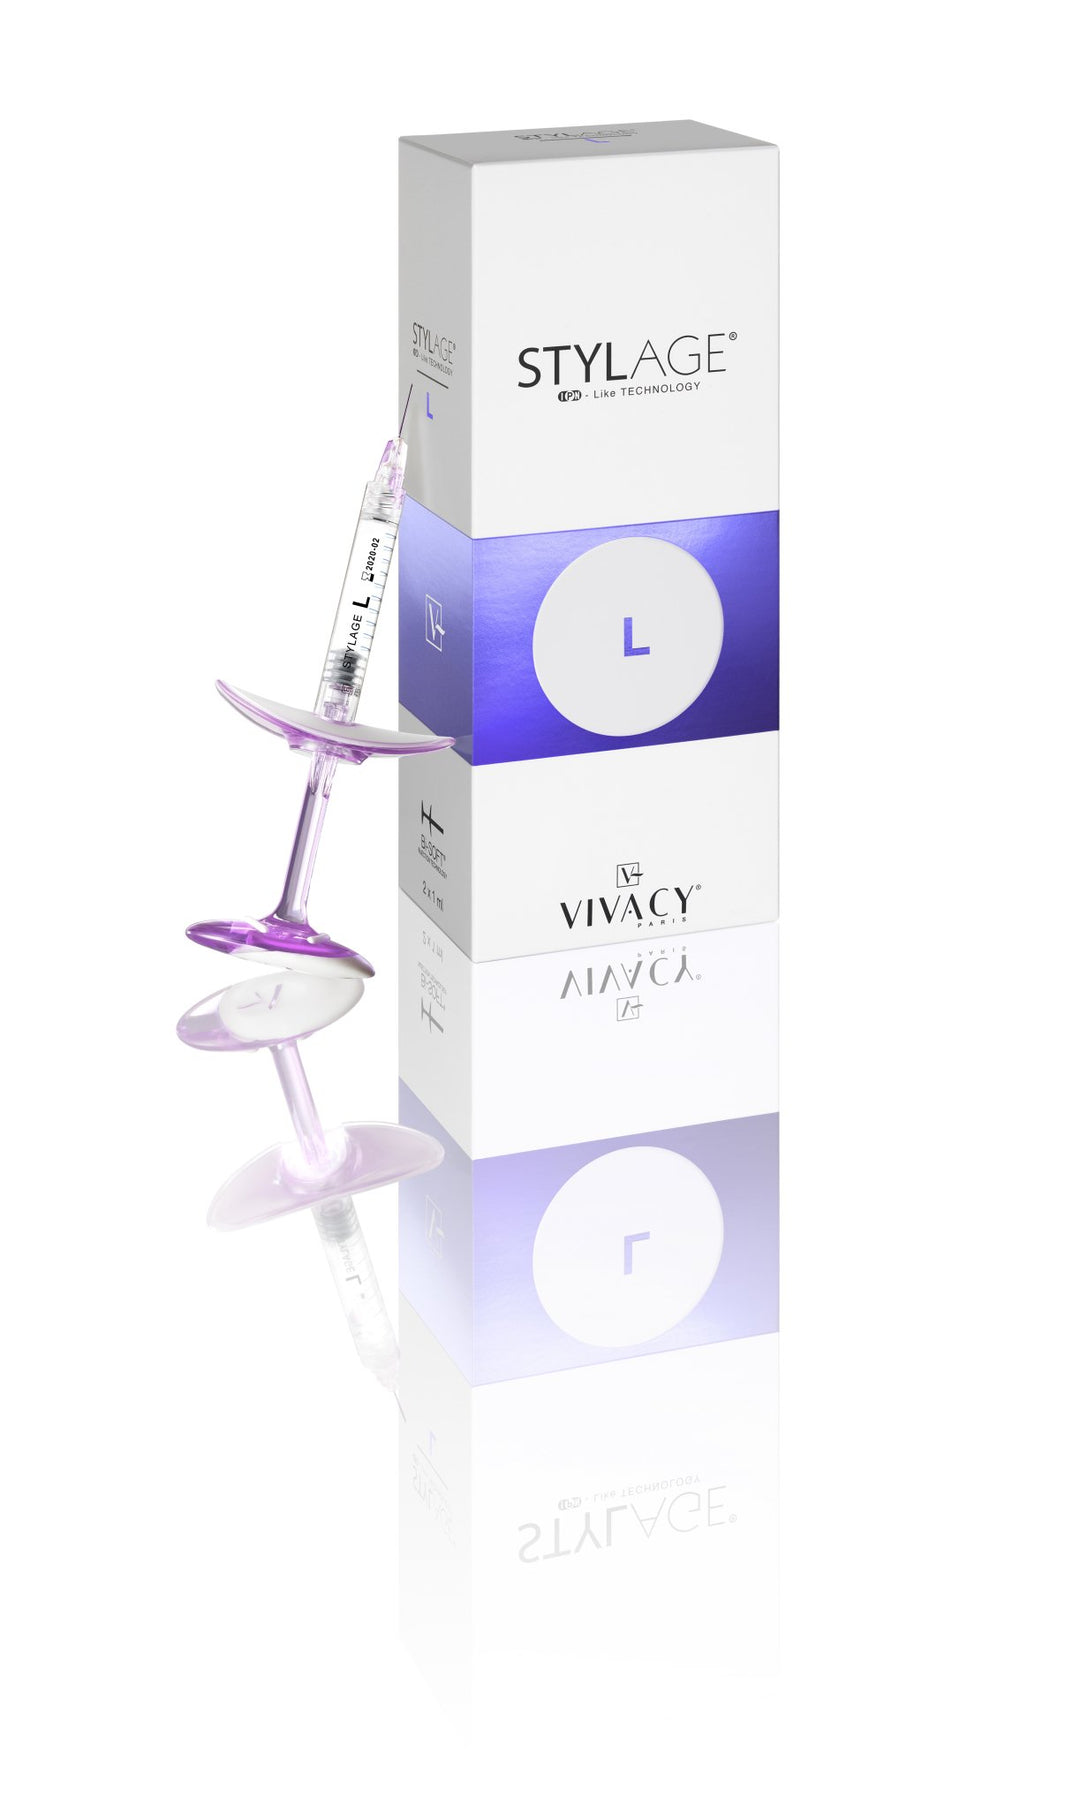 Vivacy - Stylage L Bi-Soft 2 x 1ml - DANYCARE